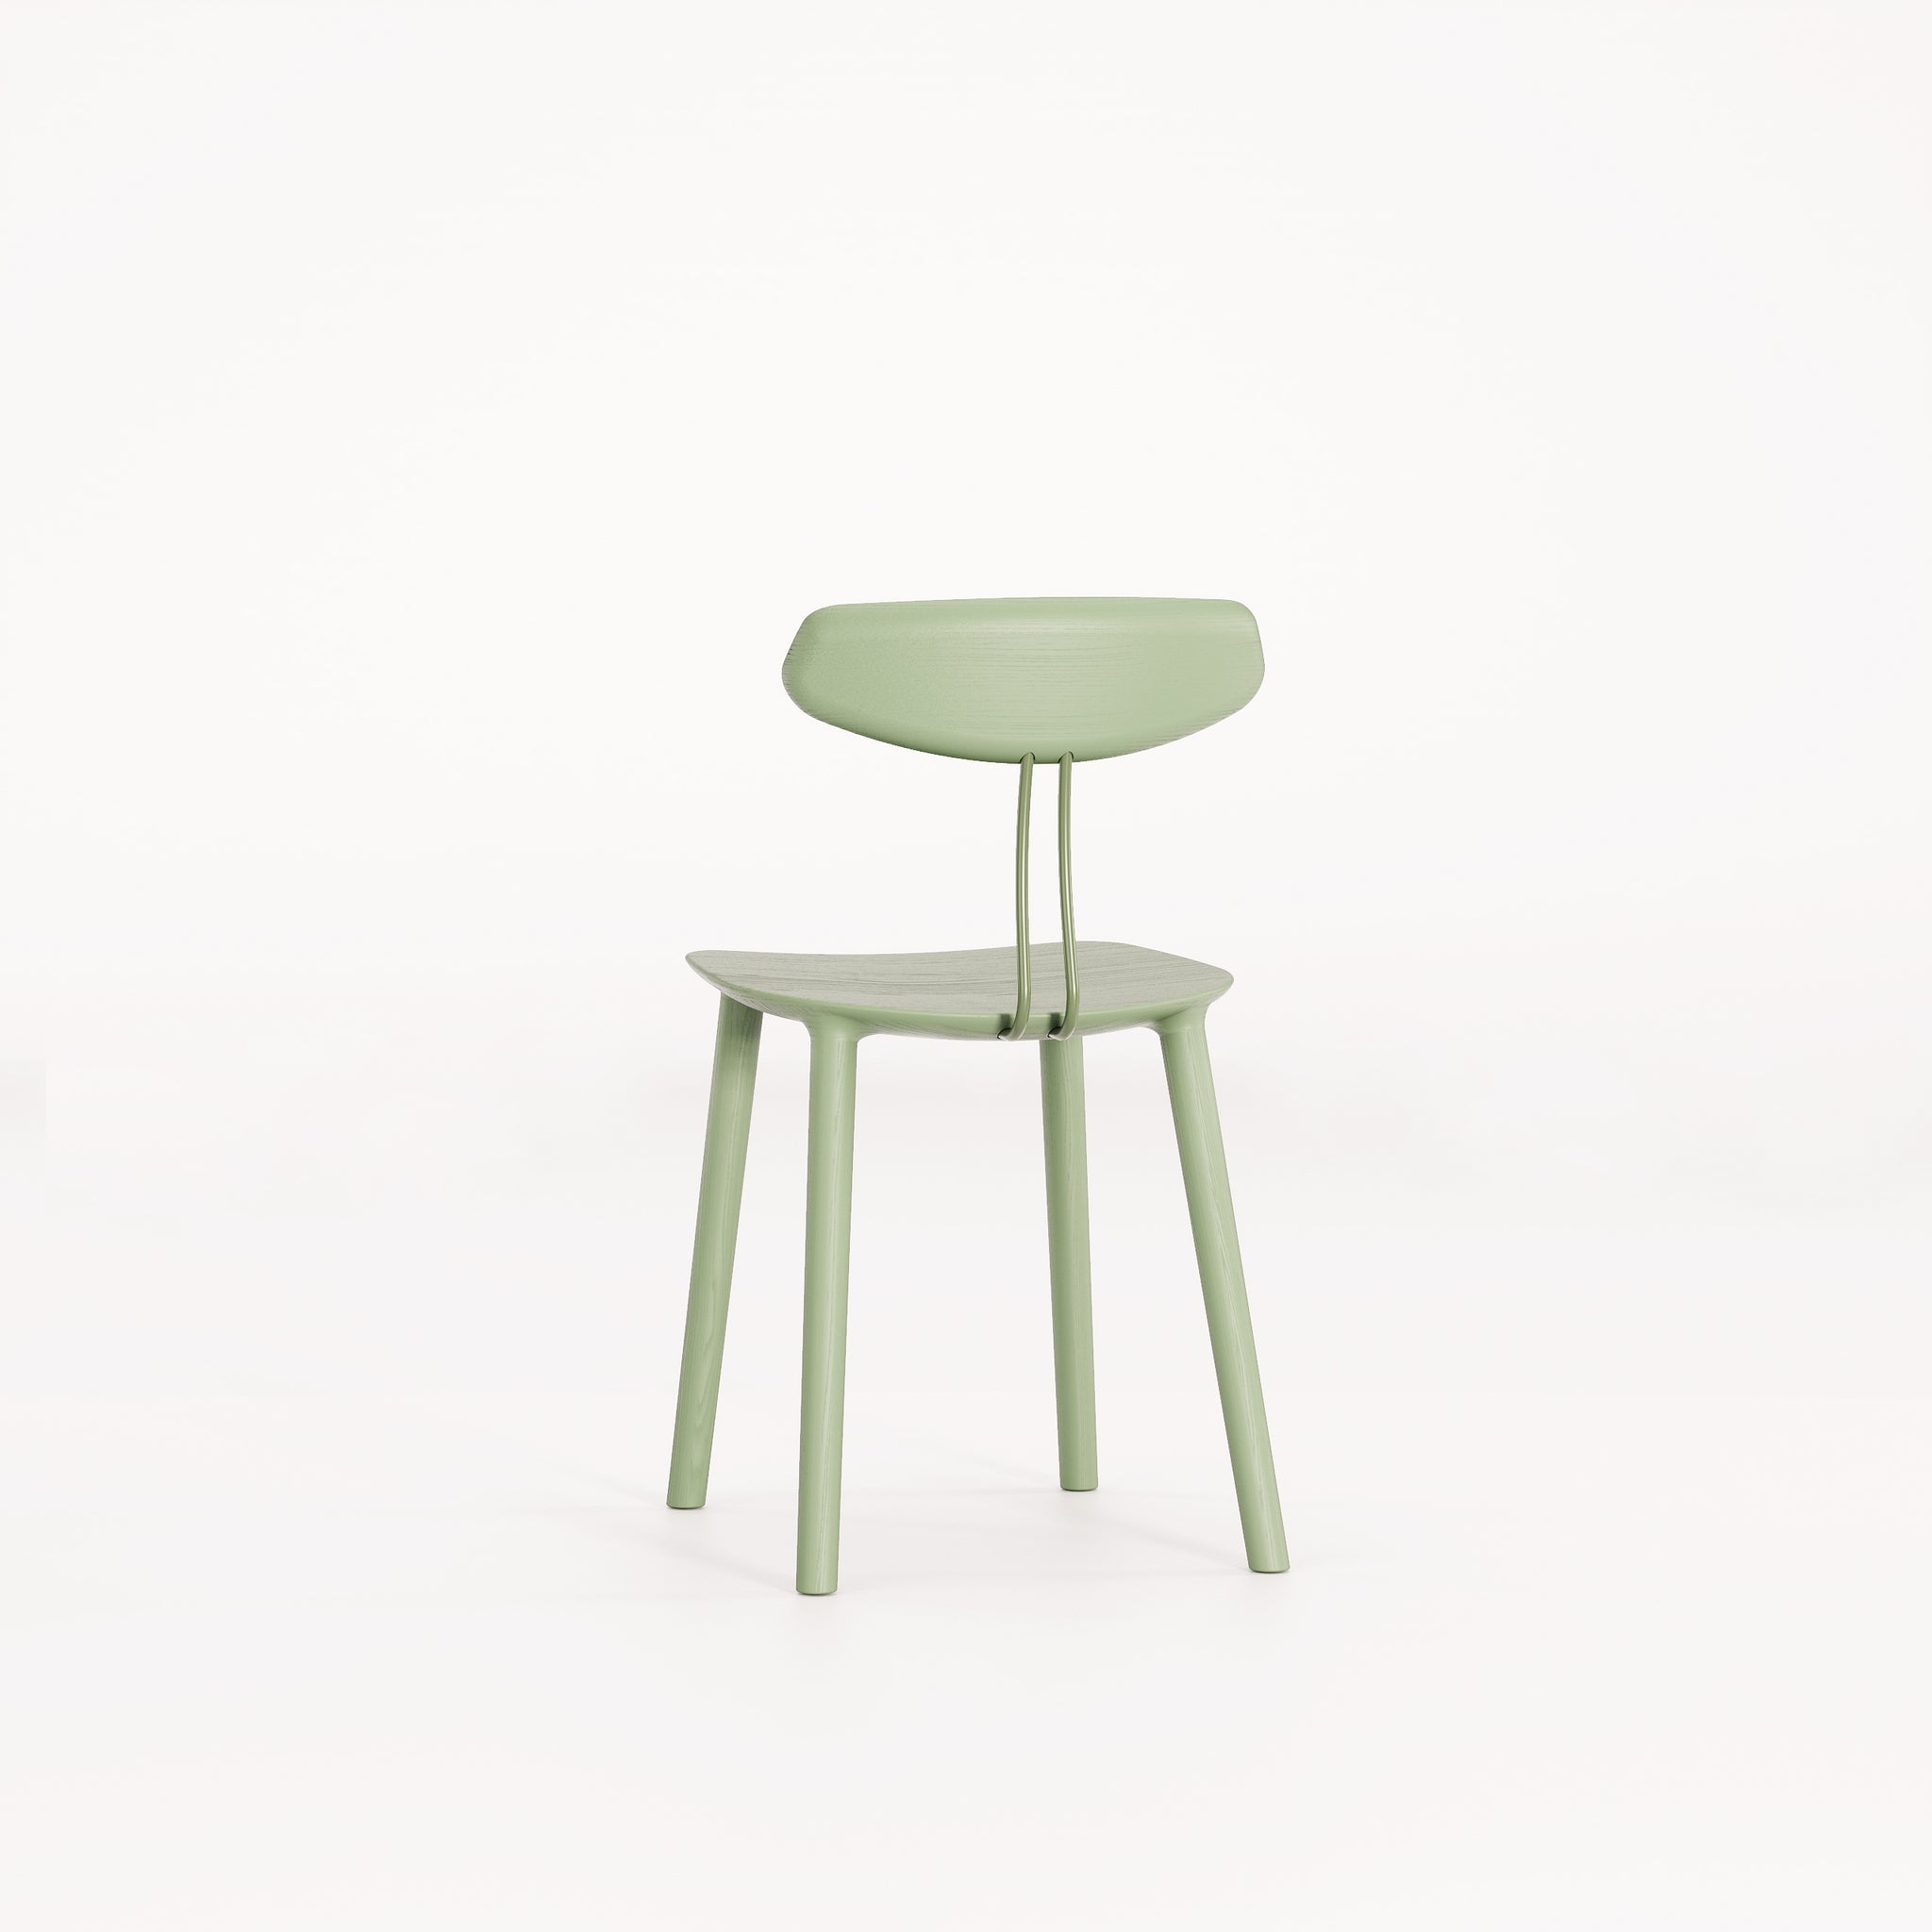 Mast Furniture Green Stem Chair Side